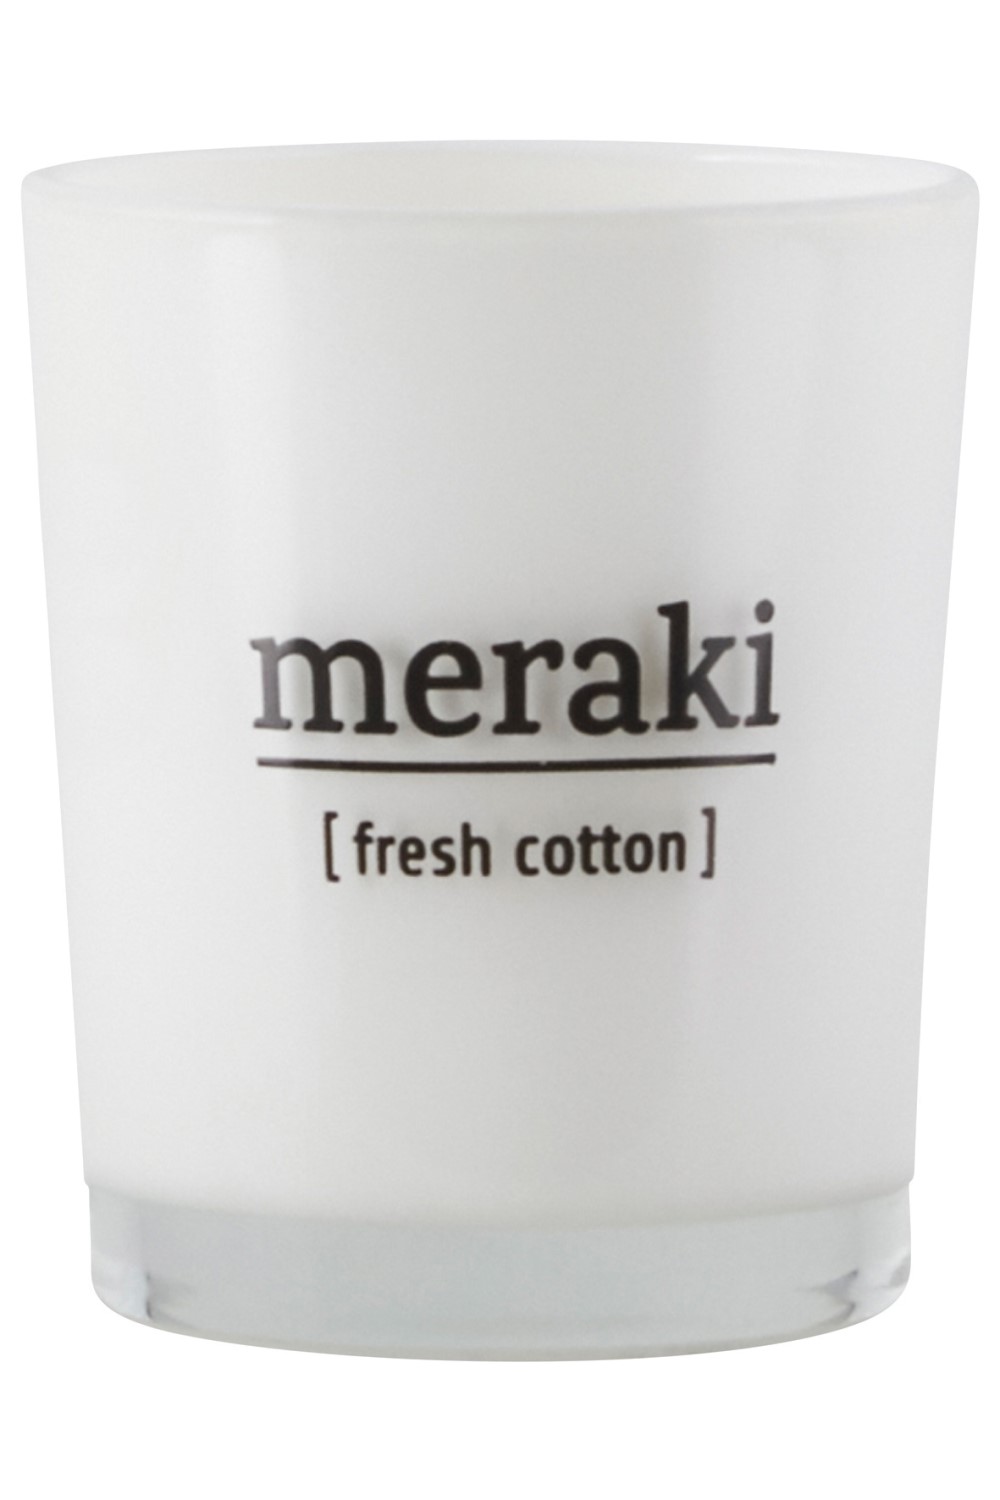 meraki Duftkerze aus Soja-Wachs fresh cotton Ø5x6cm 12h